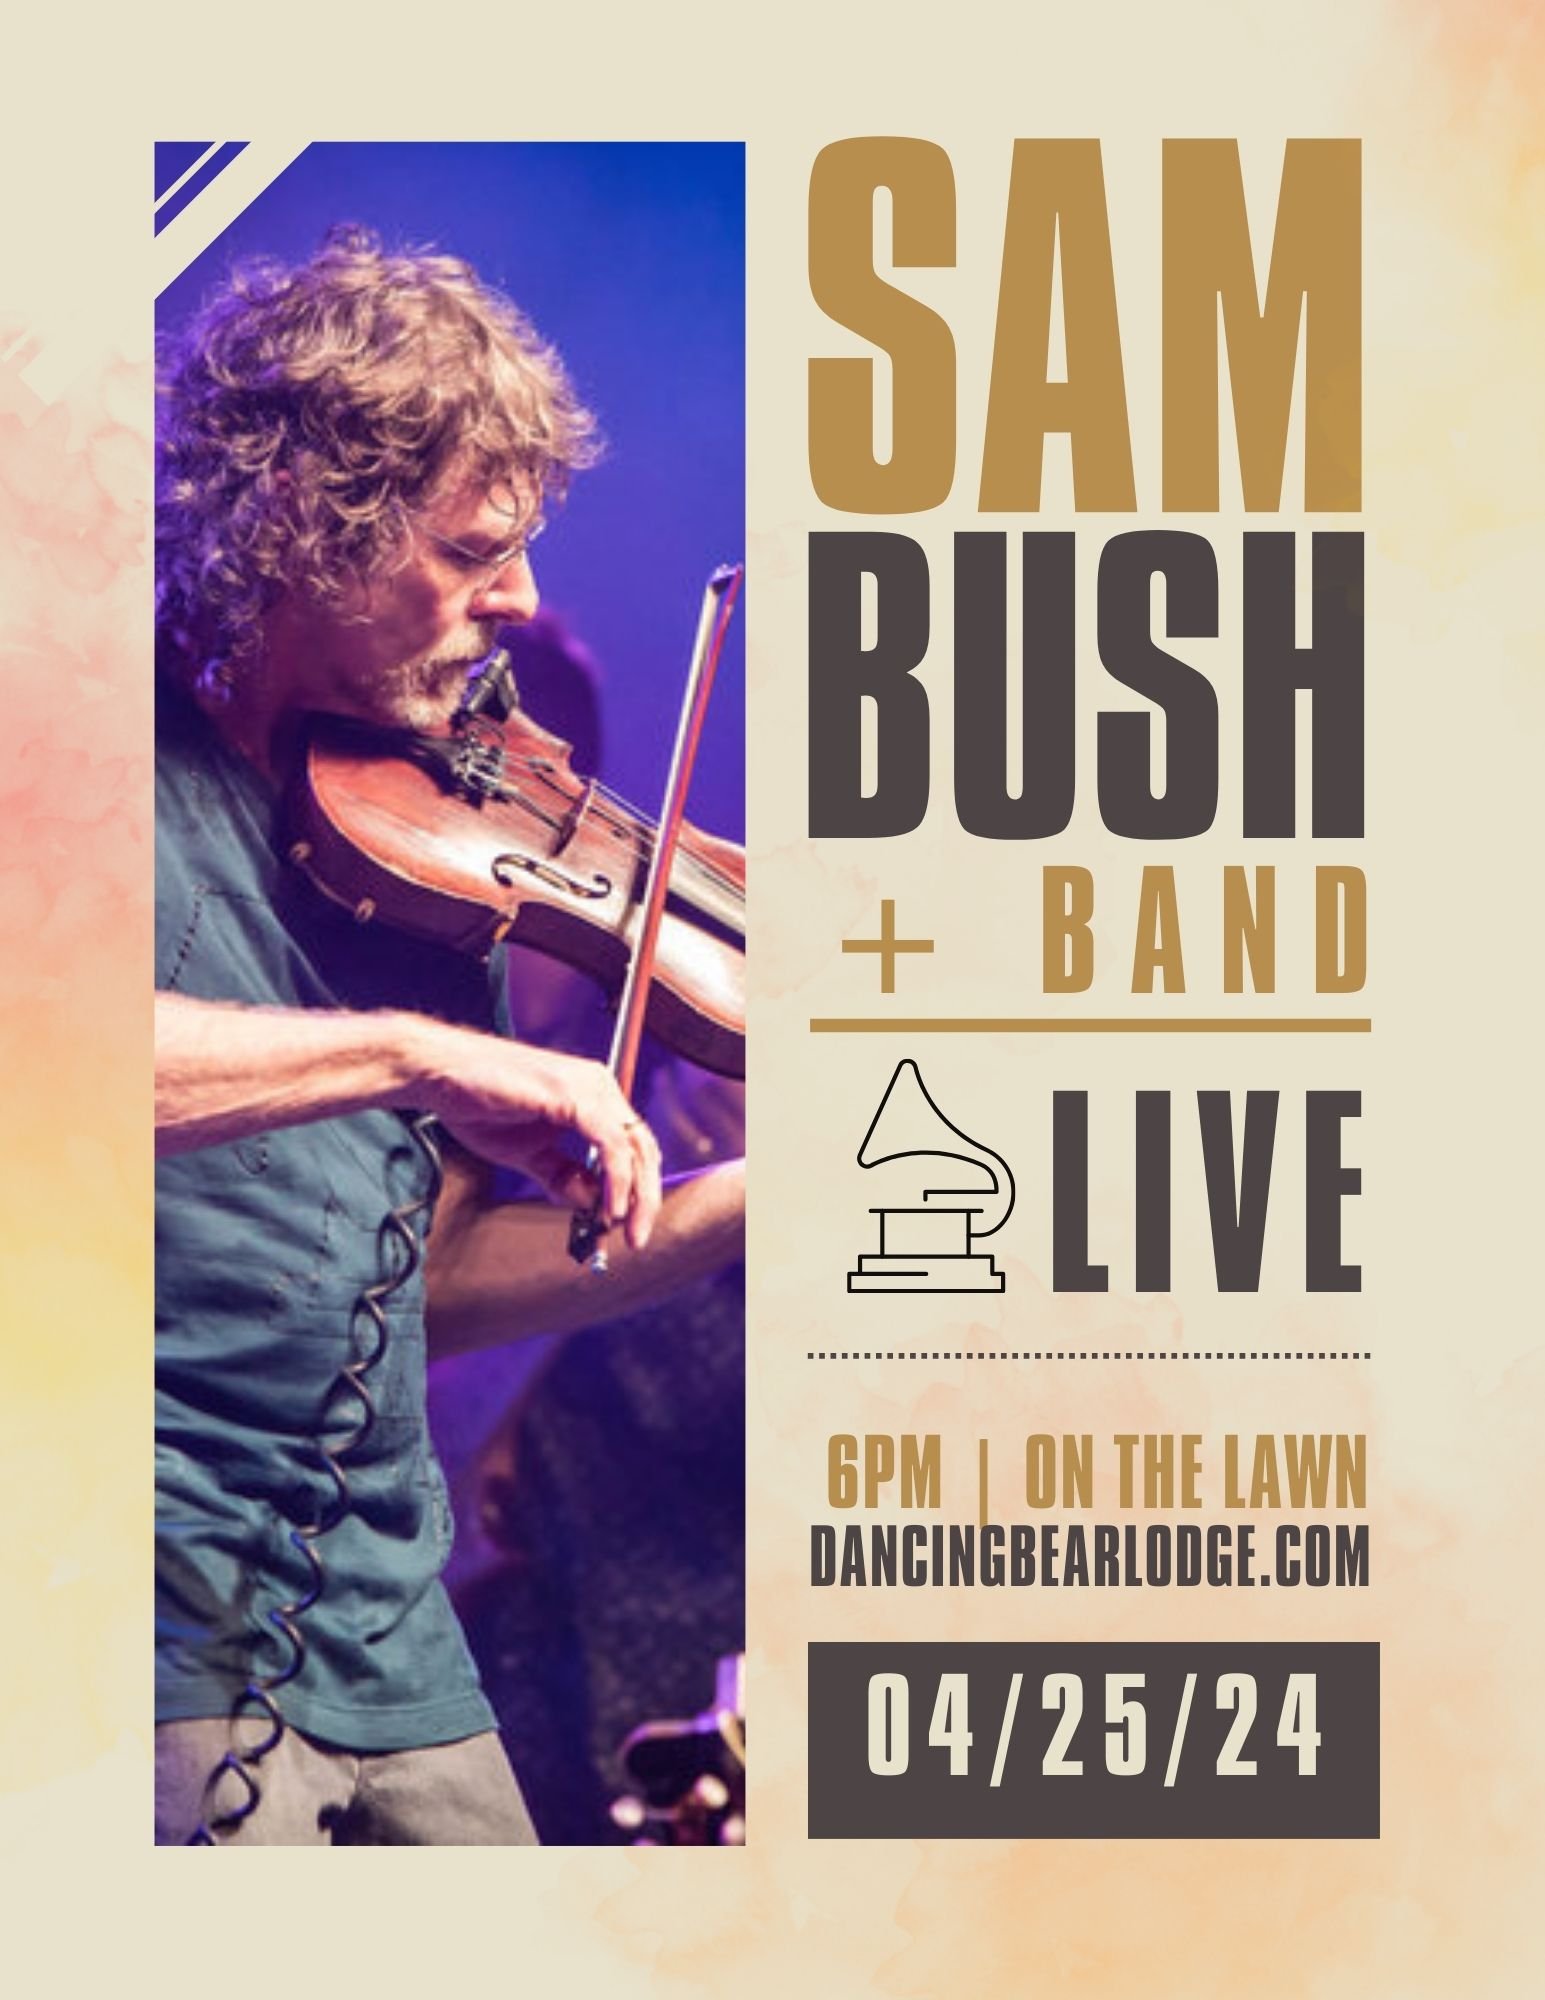 Sam Bush and Band